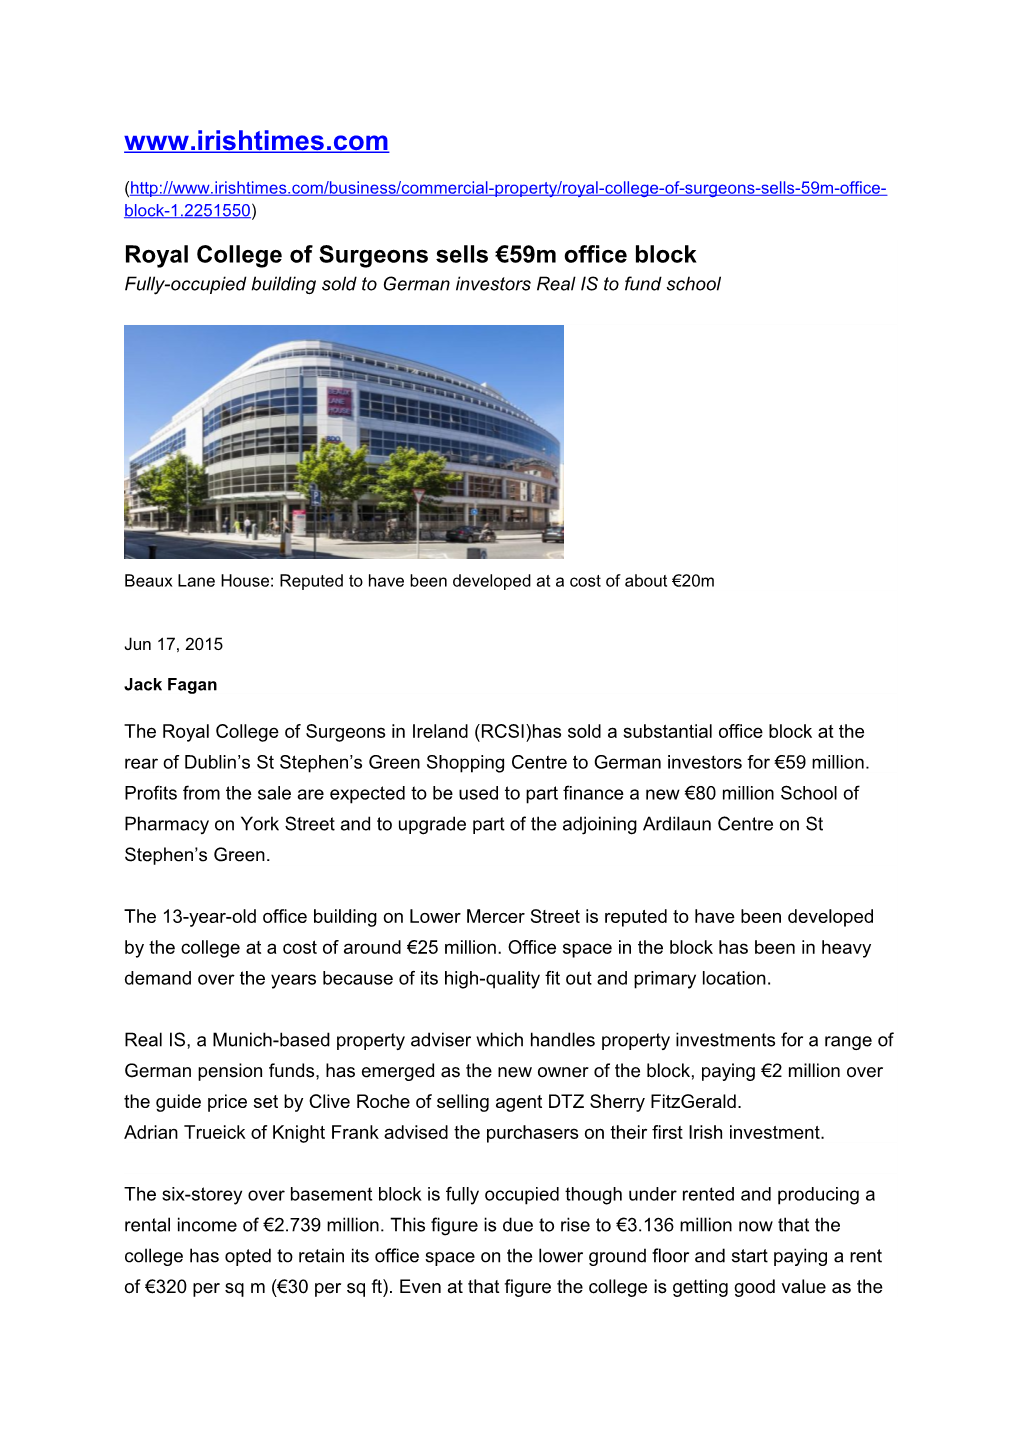 Royal College of Surgeons Sells 59M Office Block